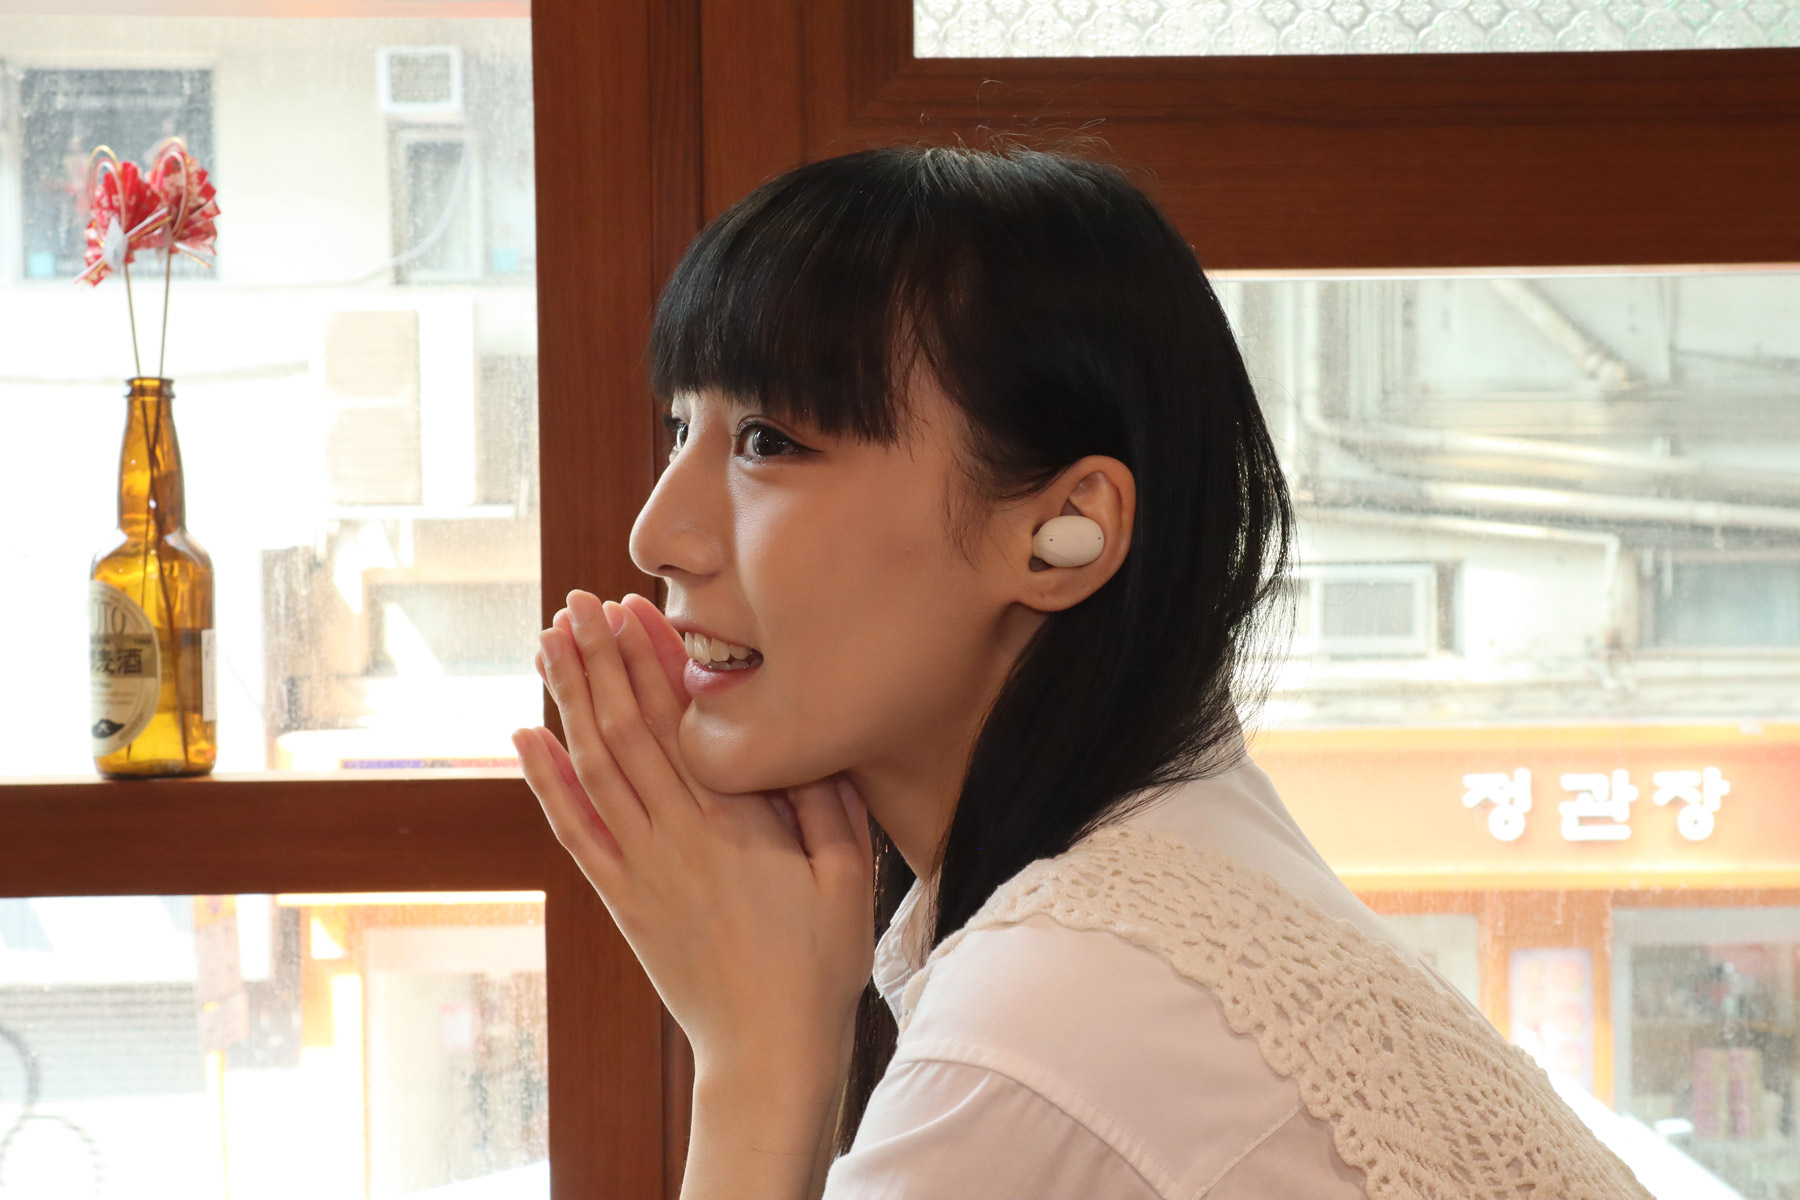 ag 短短成立 4 年，已成為日本國民心目中數一數二的受歡迎品牌。繼 PITA、COTSUBU 之後，最新推出的 UZURA 採用 3D 蛋形設計，提供更舒適的佩戴體驗。